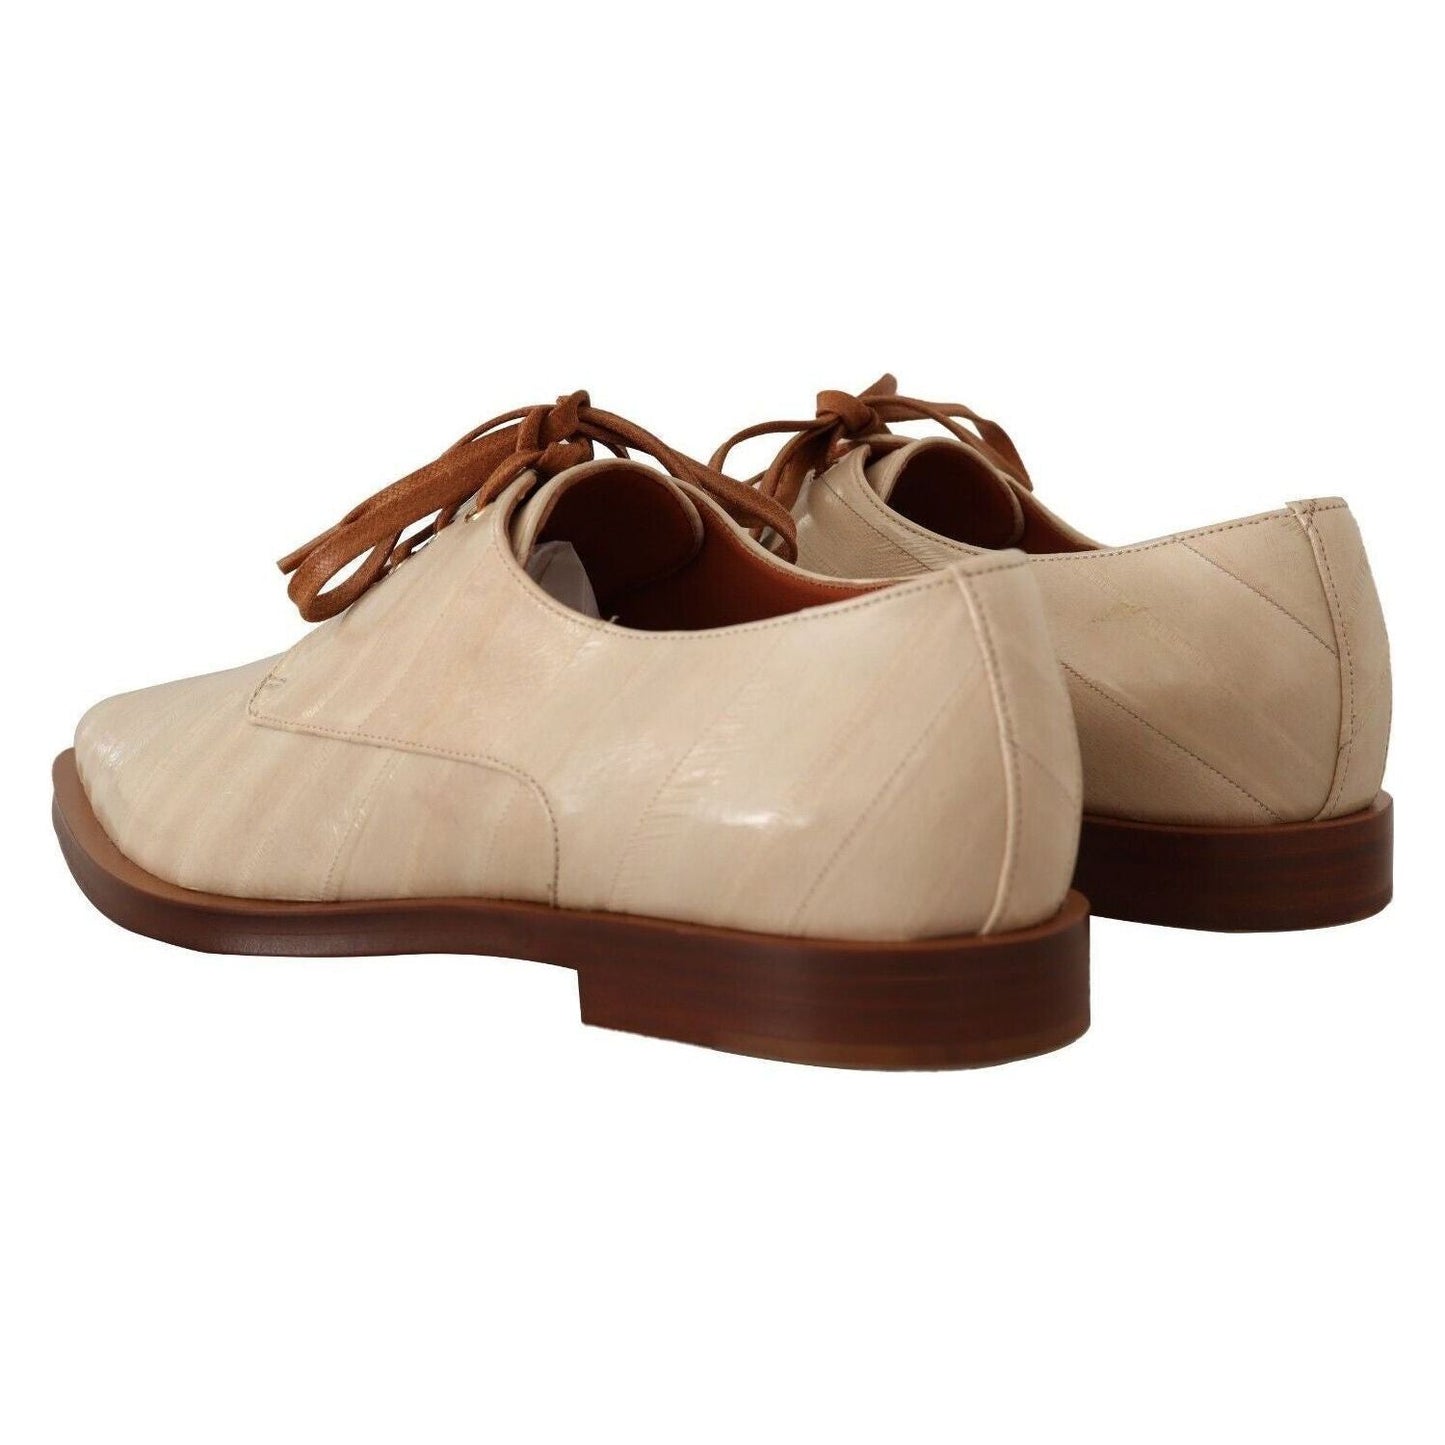 Dolce & Gabbana Elegant Beige Eel Leather Formal Flats white-eel-leather-lace-up-formal-flats-shoes s-l1600-3-129-19a0c60f-91c.jpg